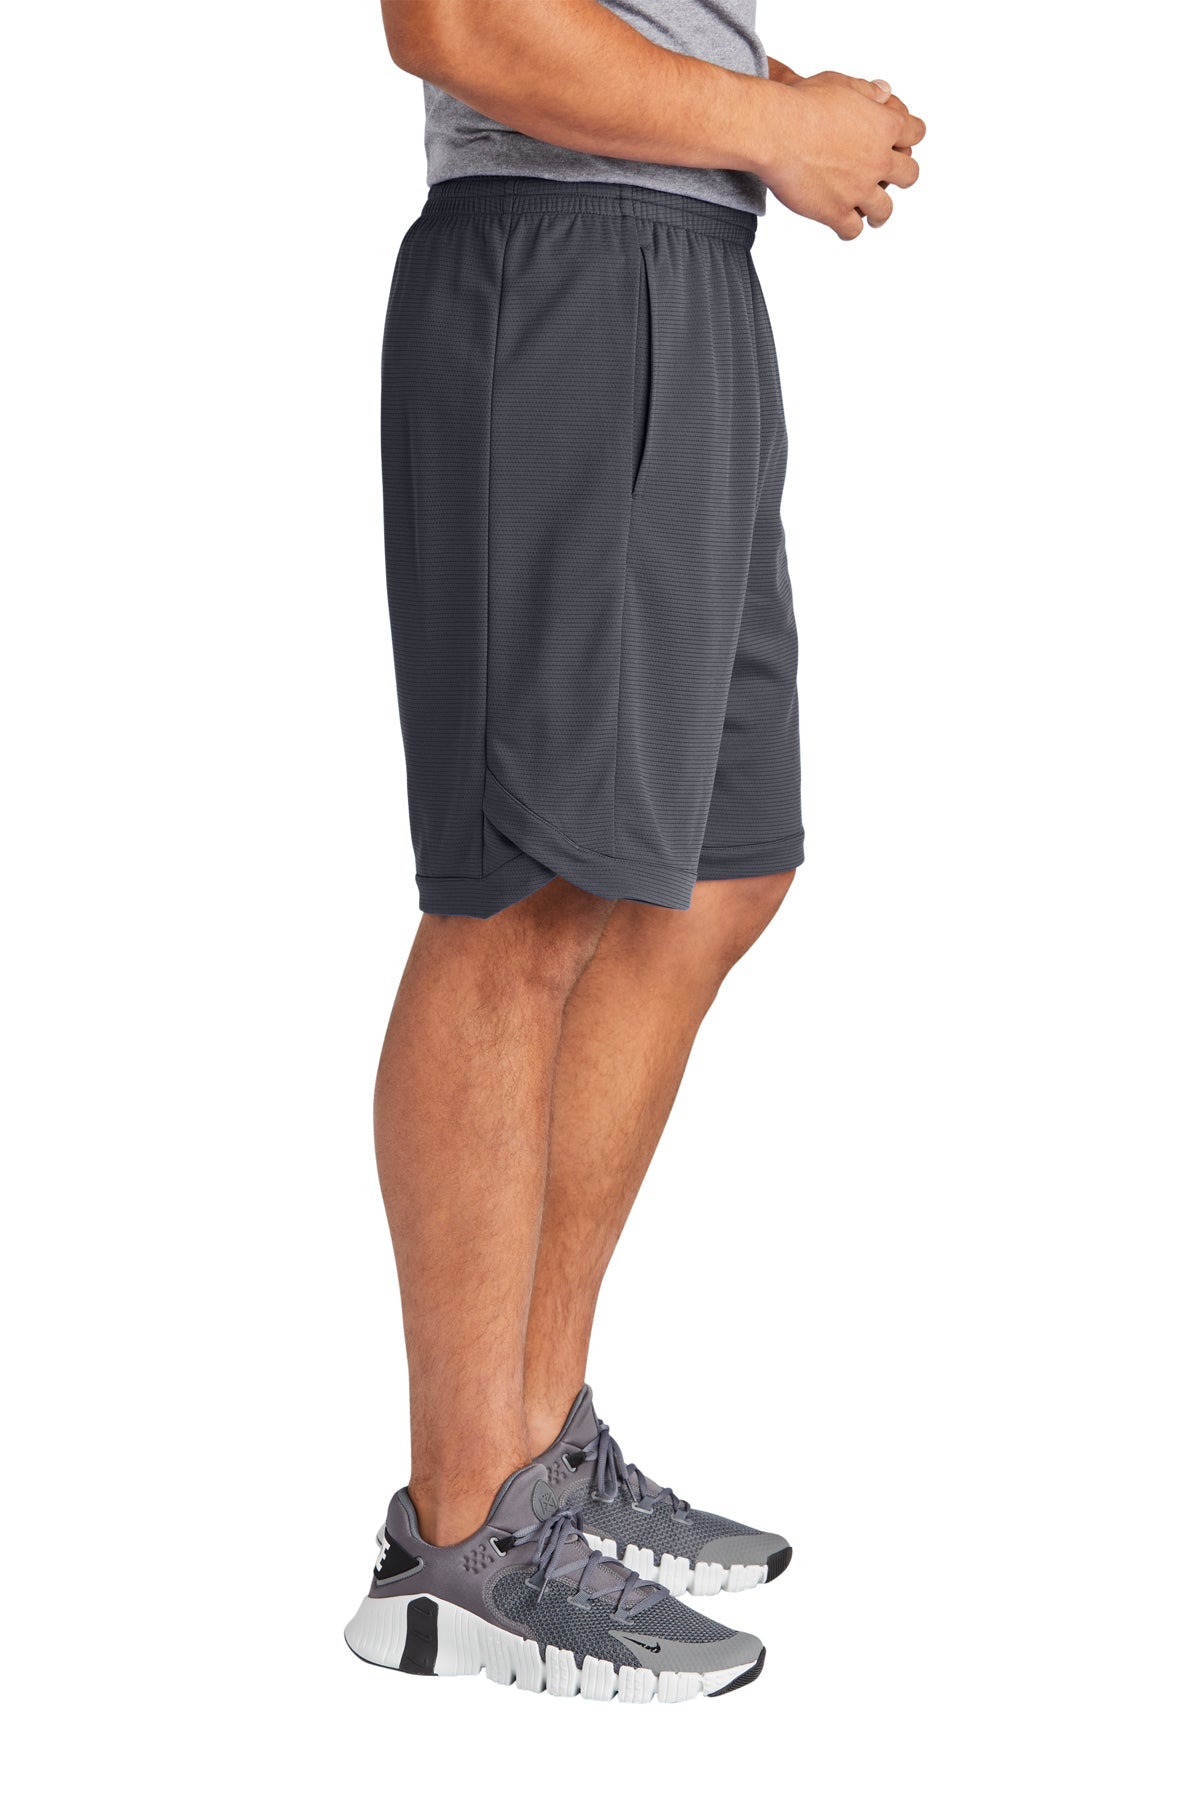 Sport-Tek Custom PosiCharge Position Shorts with Pockets, Graphite